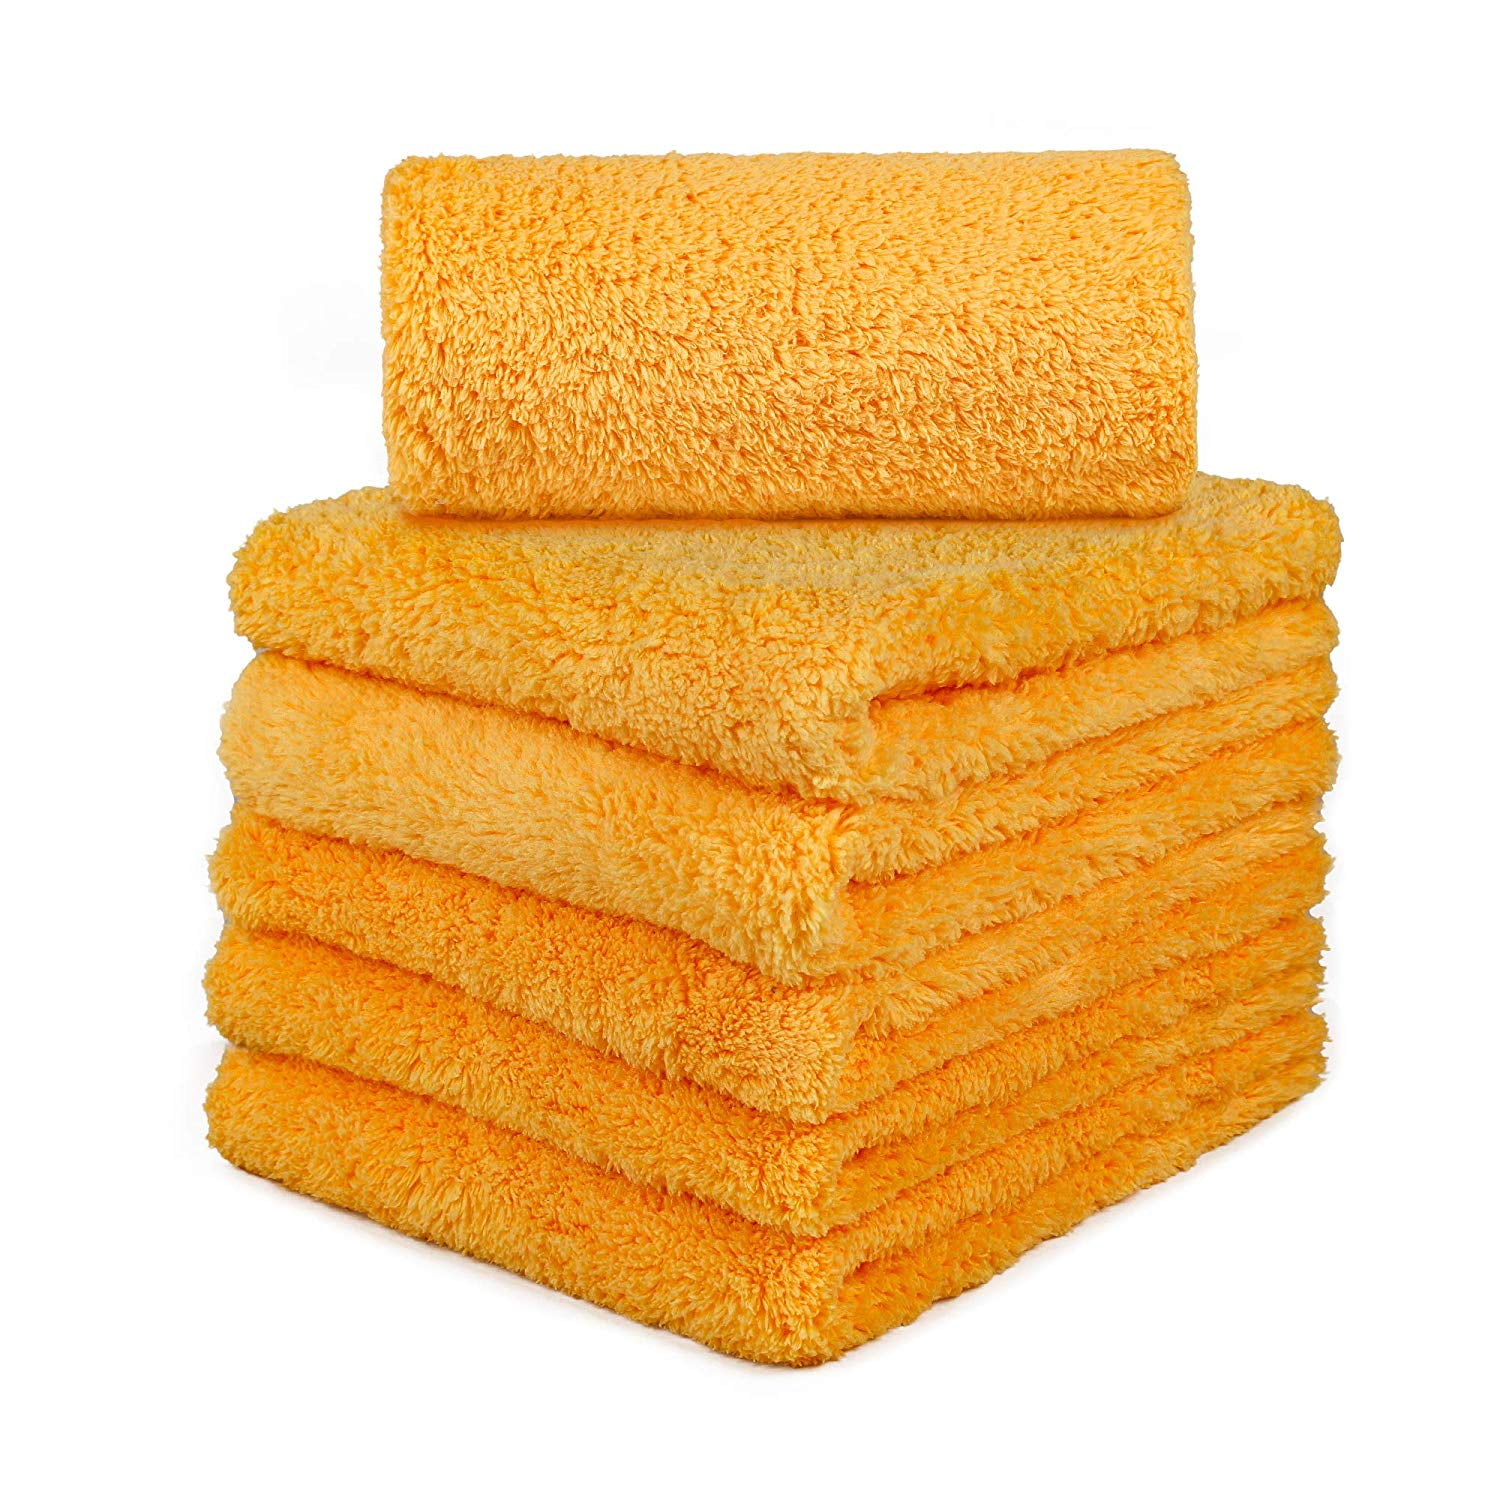 CARCAREZ Edgeless Microfiber Towels, Professional 70/30 Blend